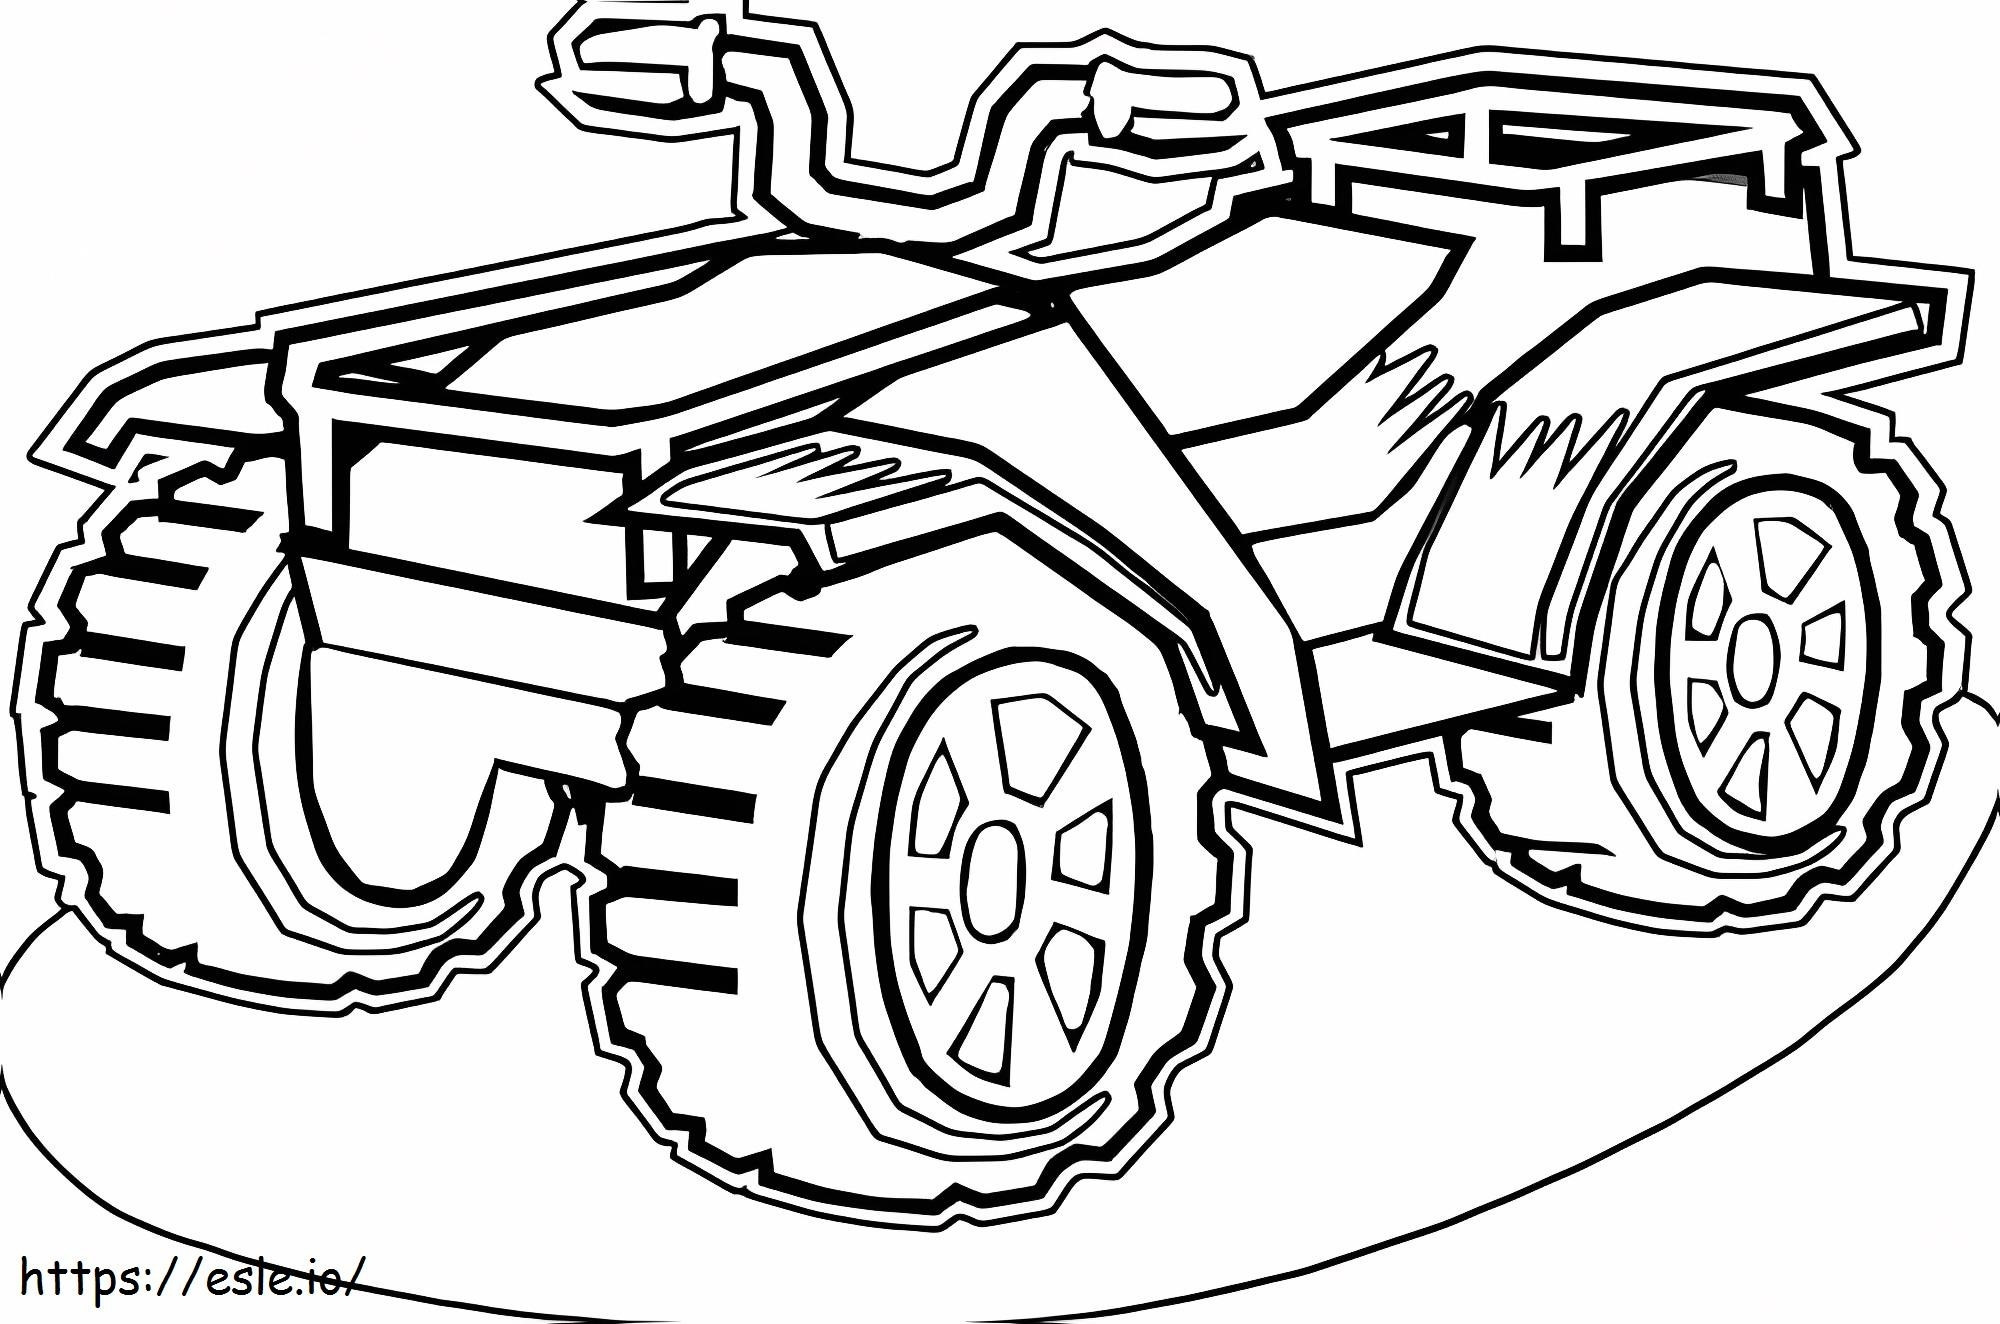 Quad ATV coloring page